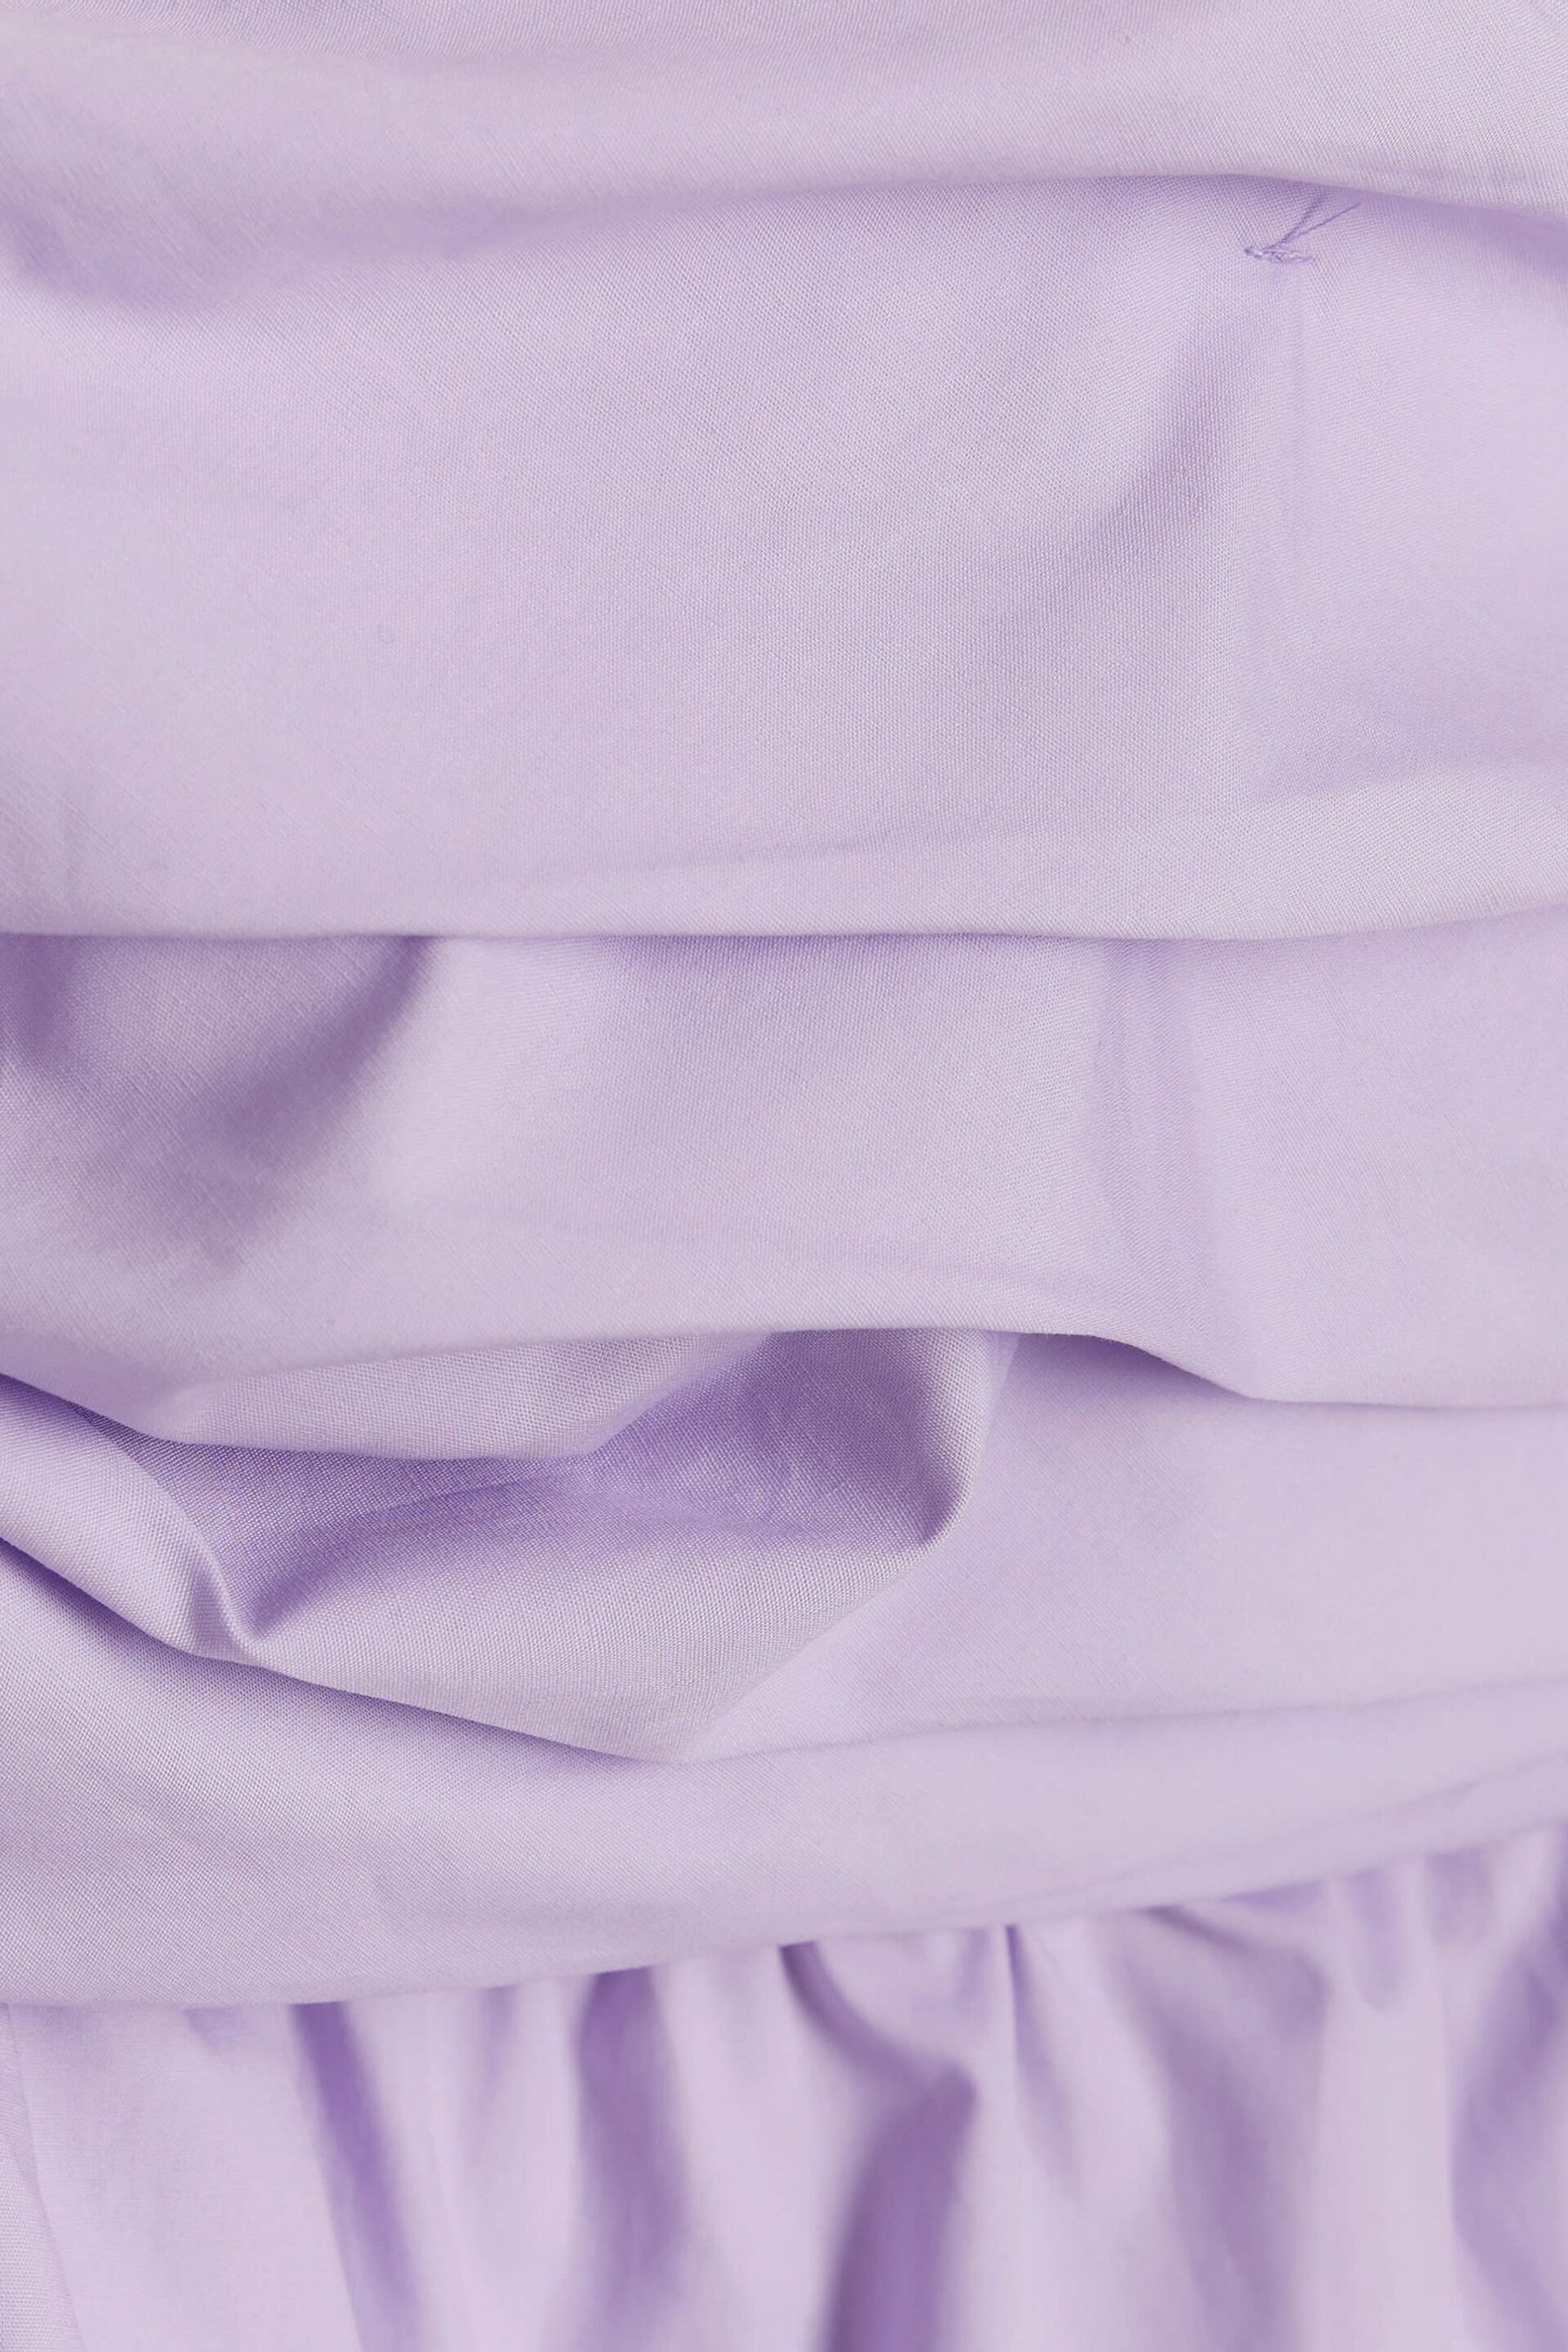 River Island Purple Ruched Bardot Poplin Dress - Image 6 of 6